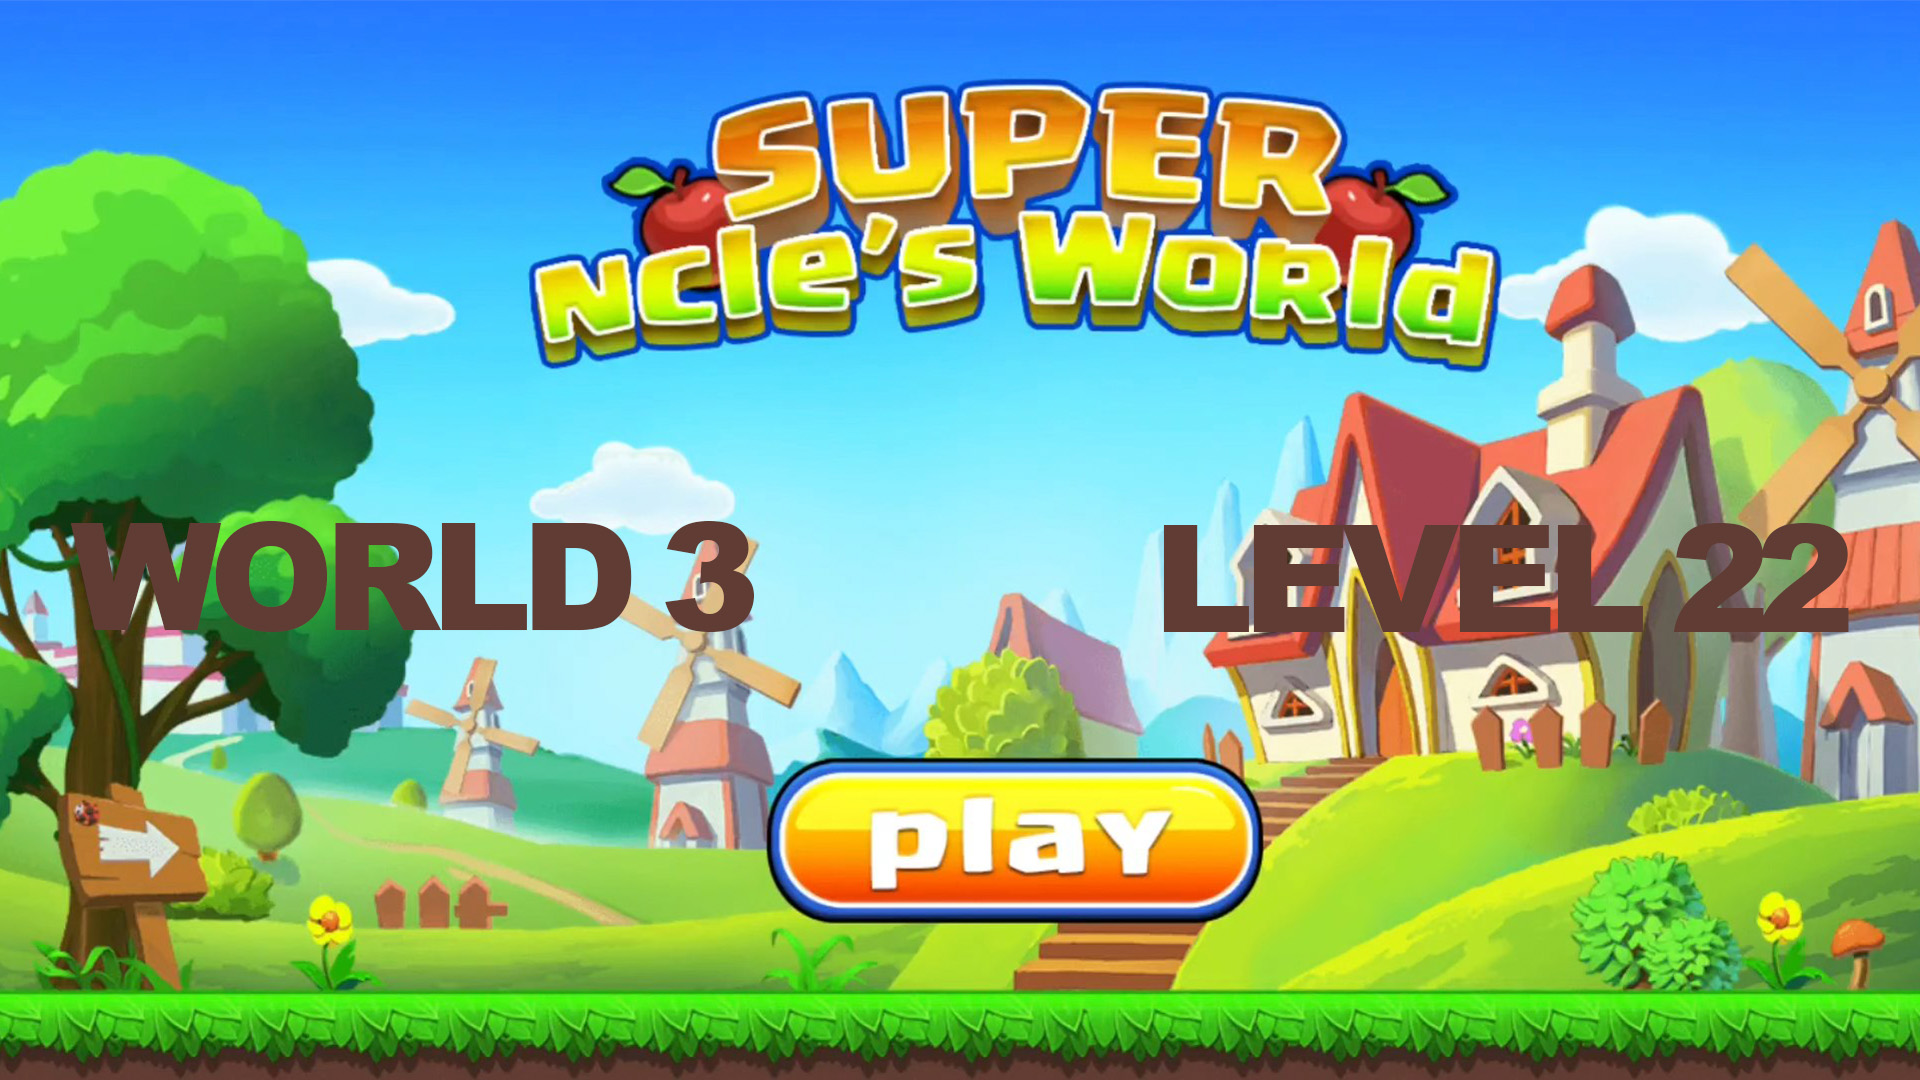 Super ncle's  World 3. Level 22.